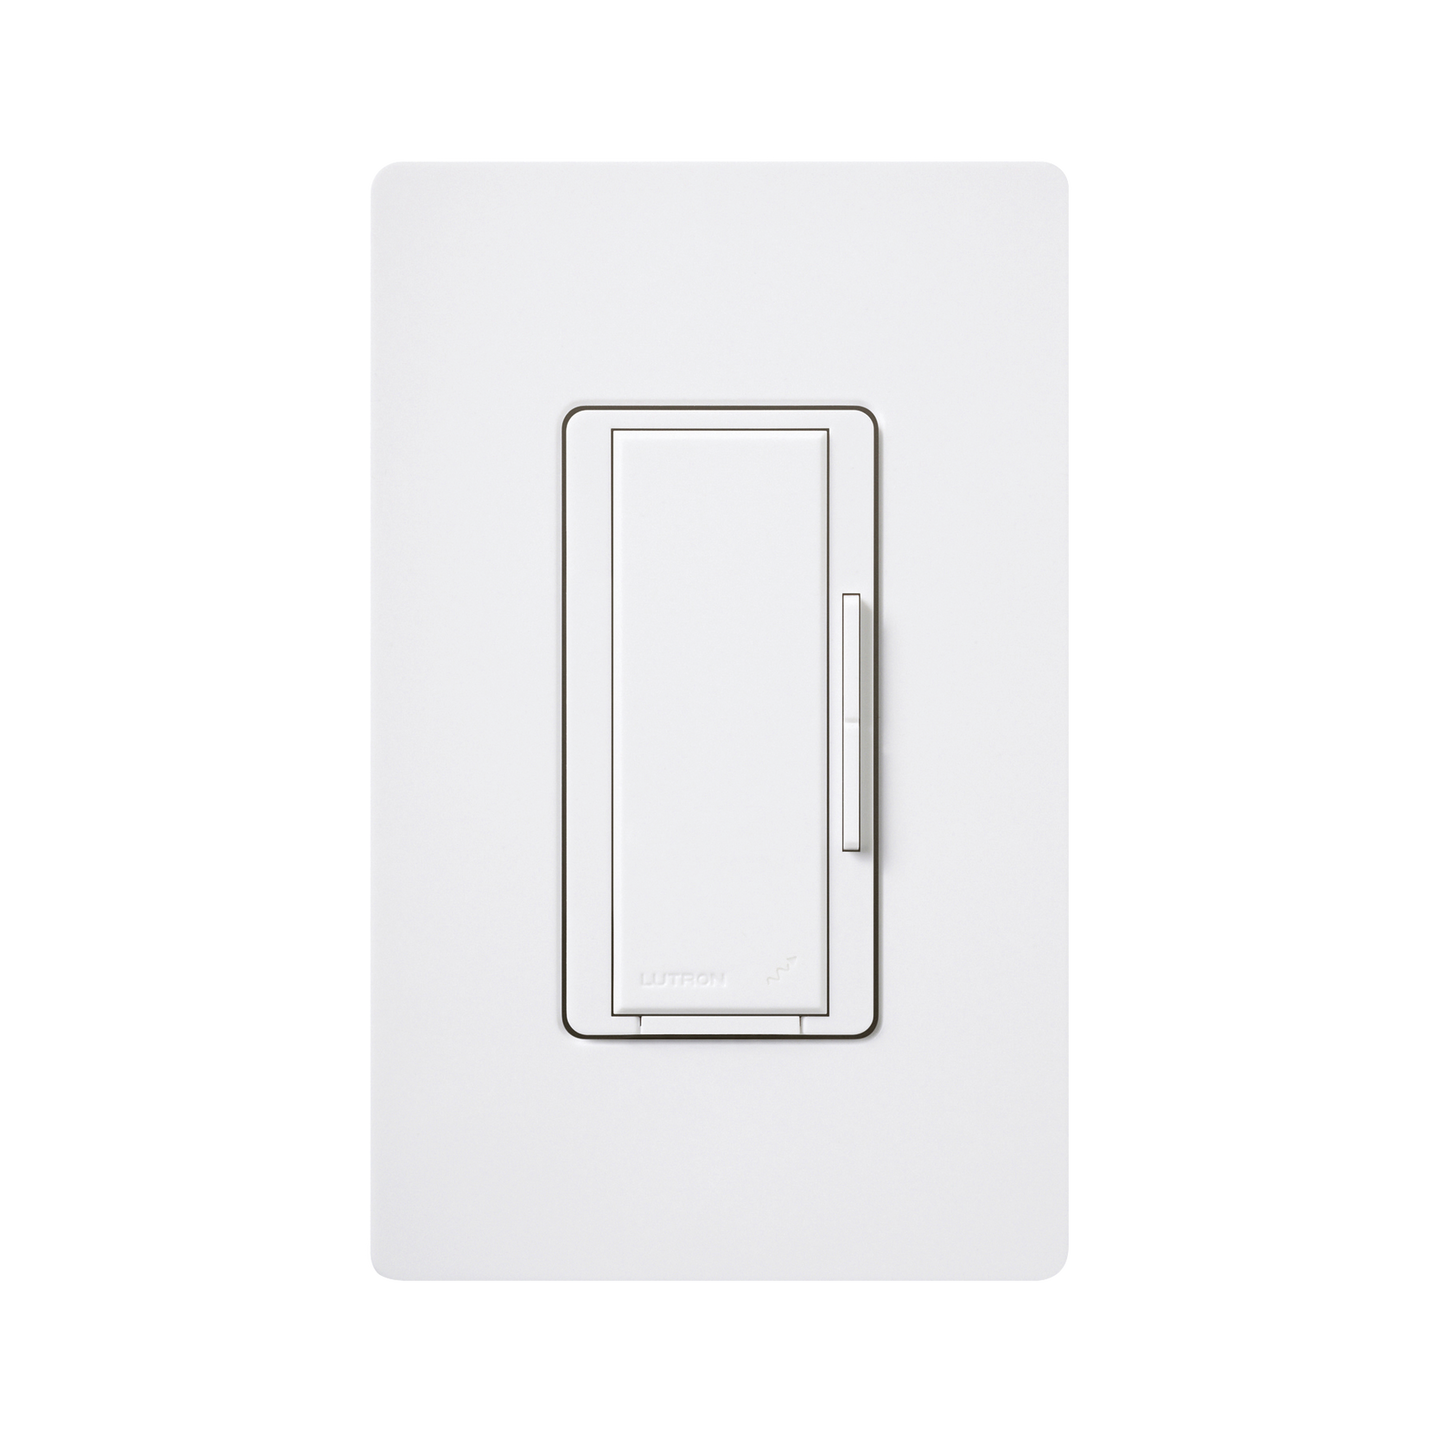 (RadioRA2) Switch on/off de pared, compañero de switch on/off multilocación. Usar en 3 vías o escalera.